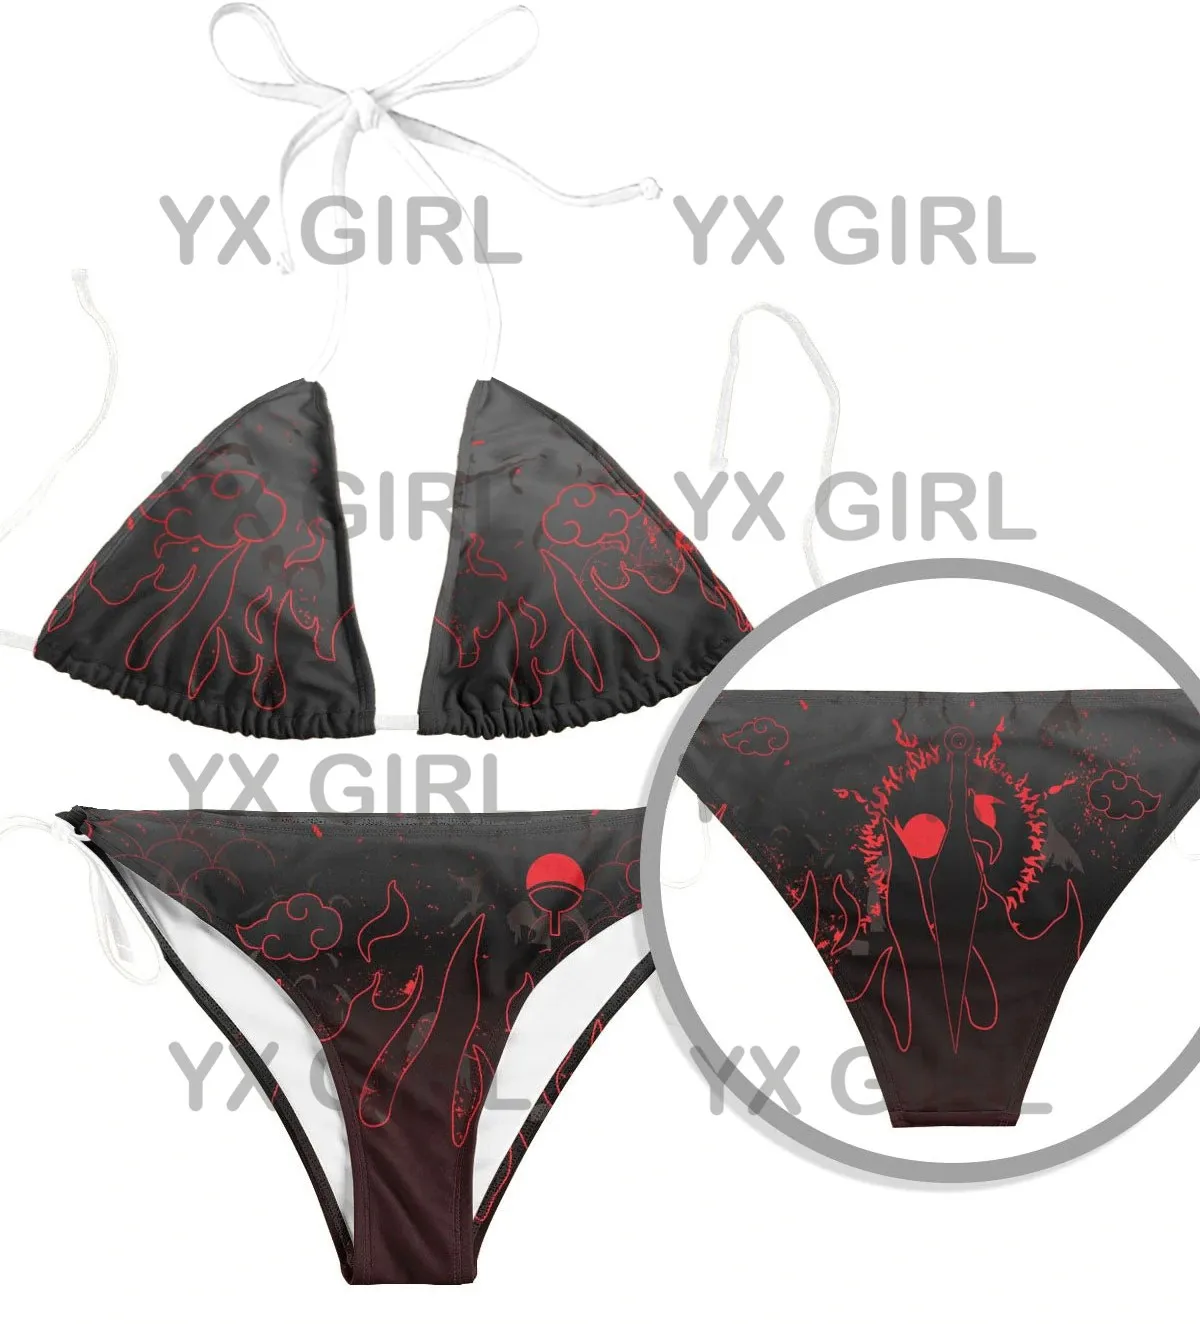 YX GIRL uchiha-emblem-bikini-swimsuit 3D All Over Printed Sexy Bikini Summer Women For Girl Beach Swimsuit Cosplay Clothes